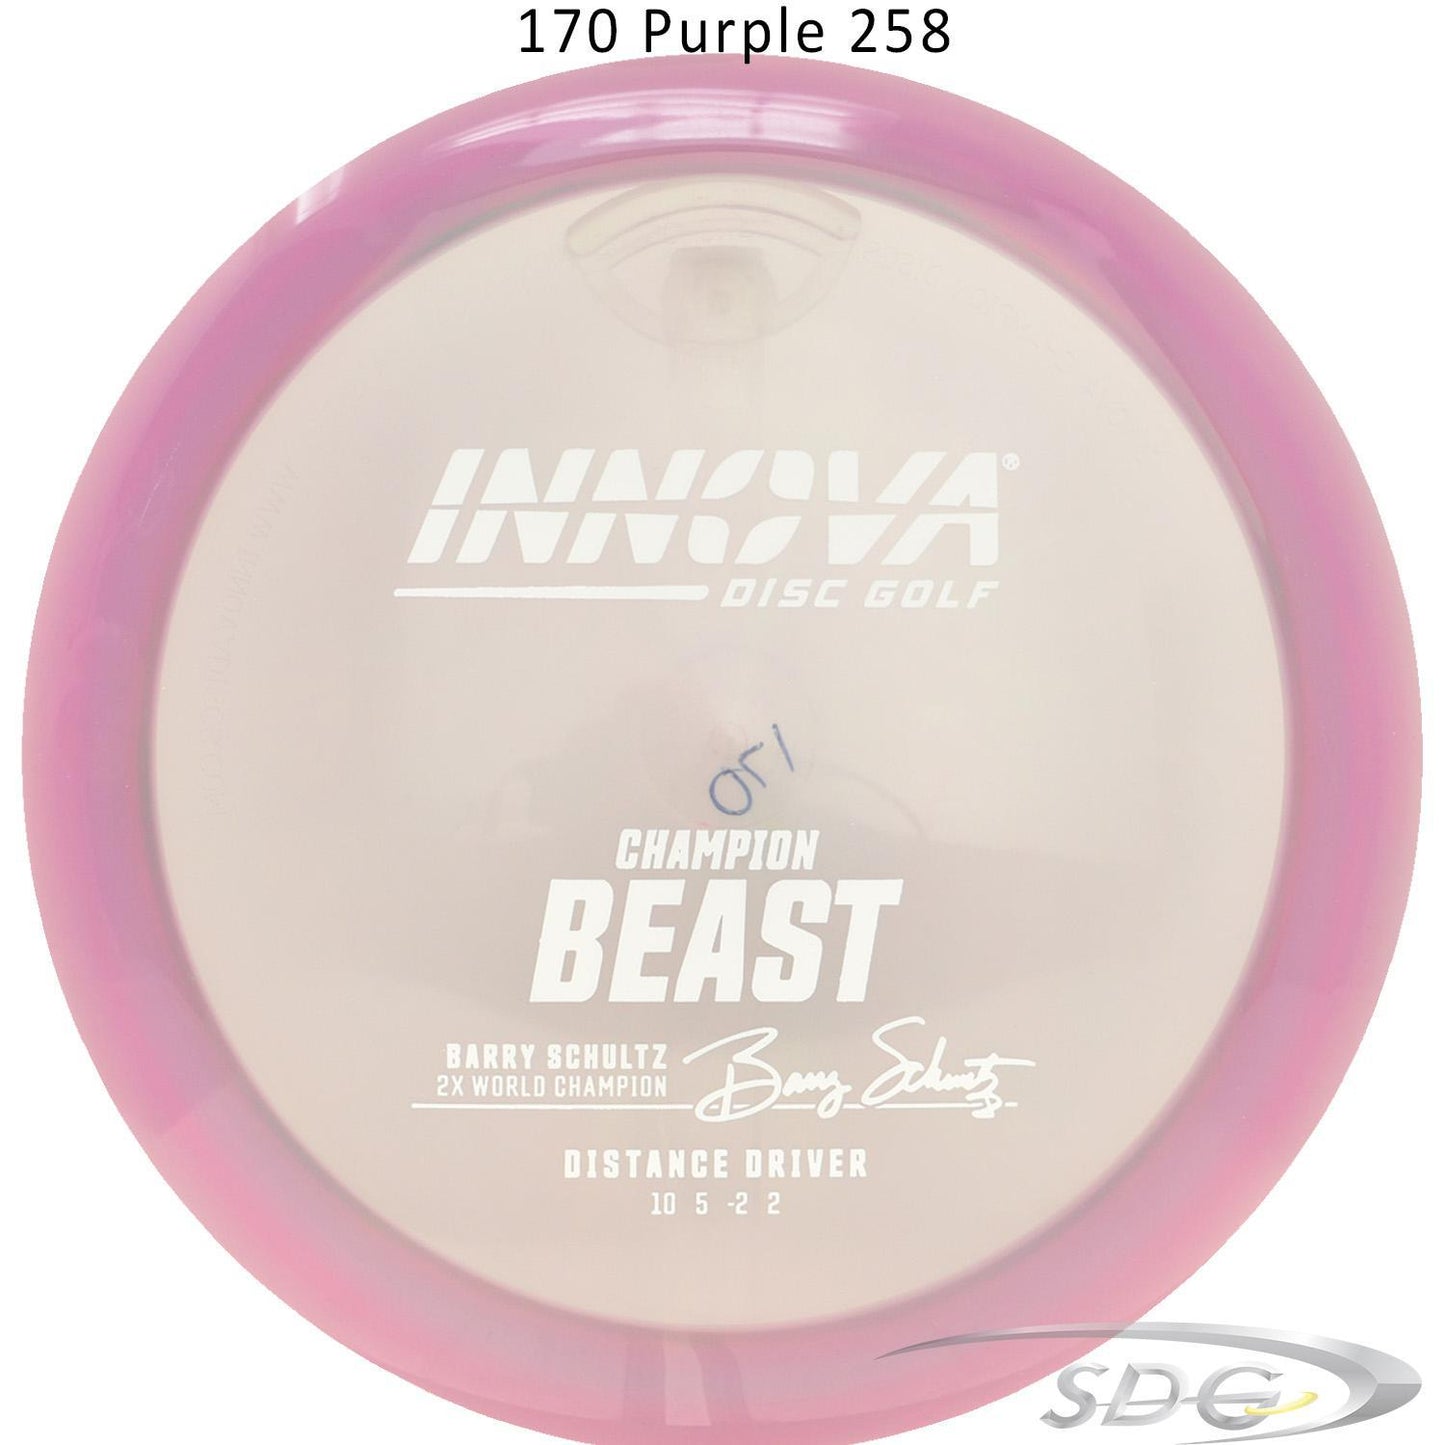 innova-champion-beast-disc-golf-distance-driver 170 Purple 258